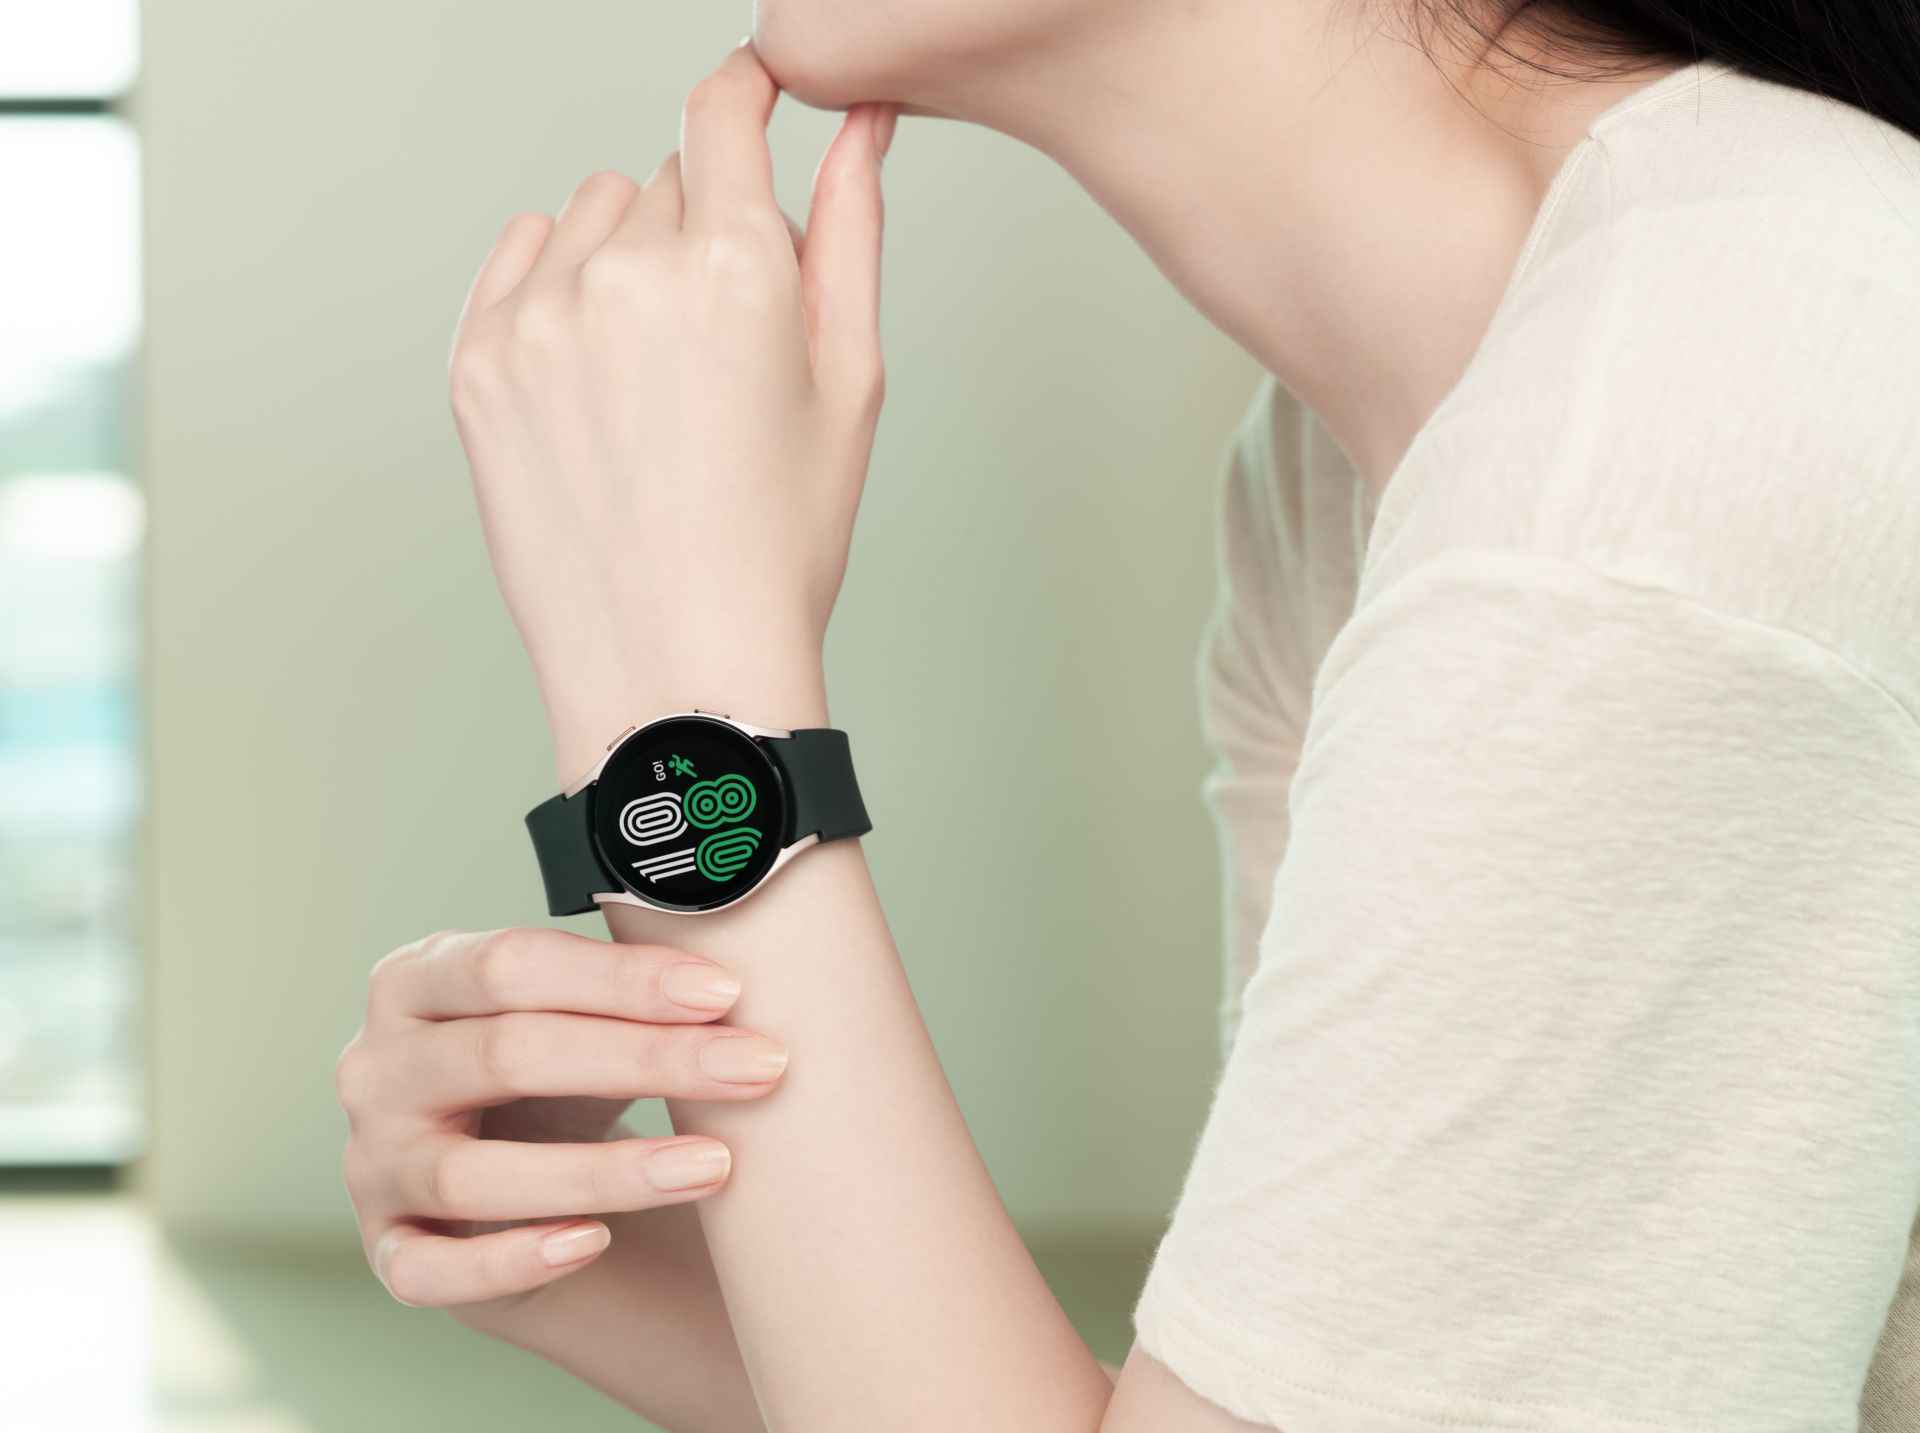 Samsung Galaxy Watch4